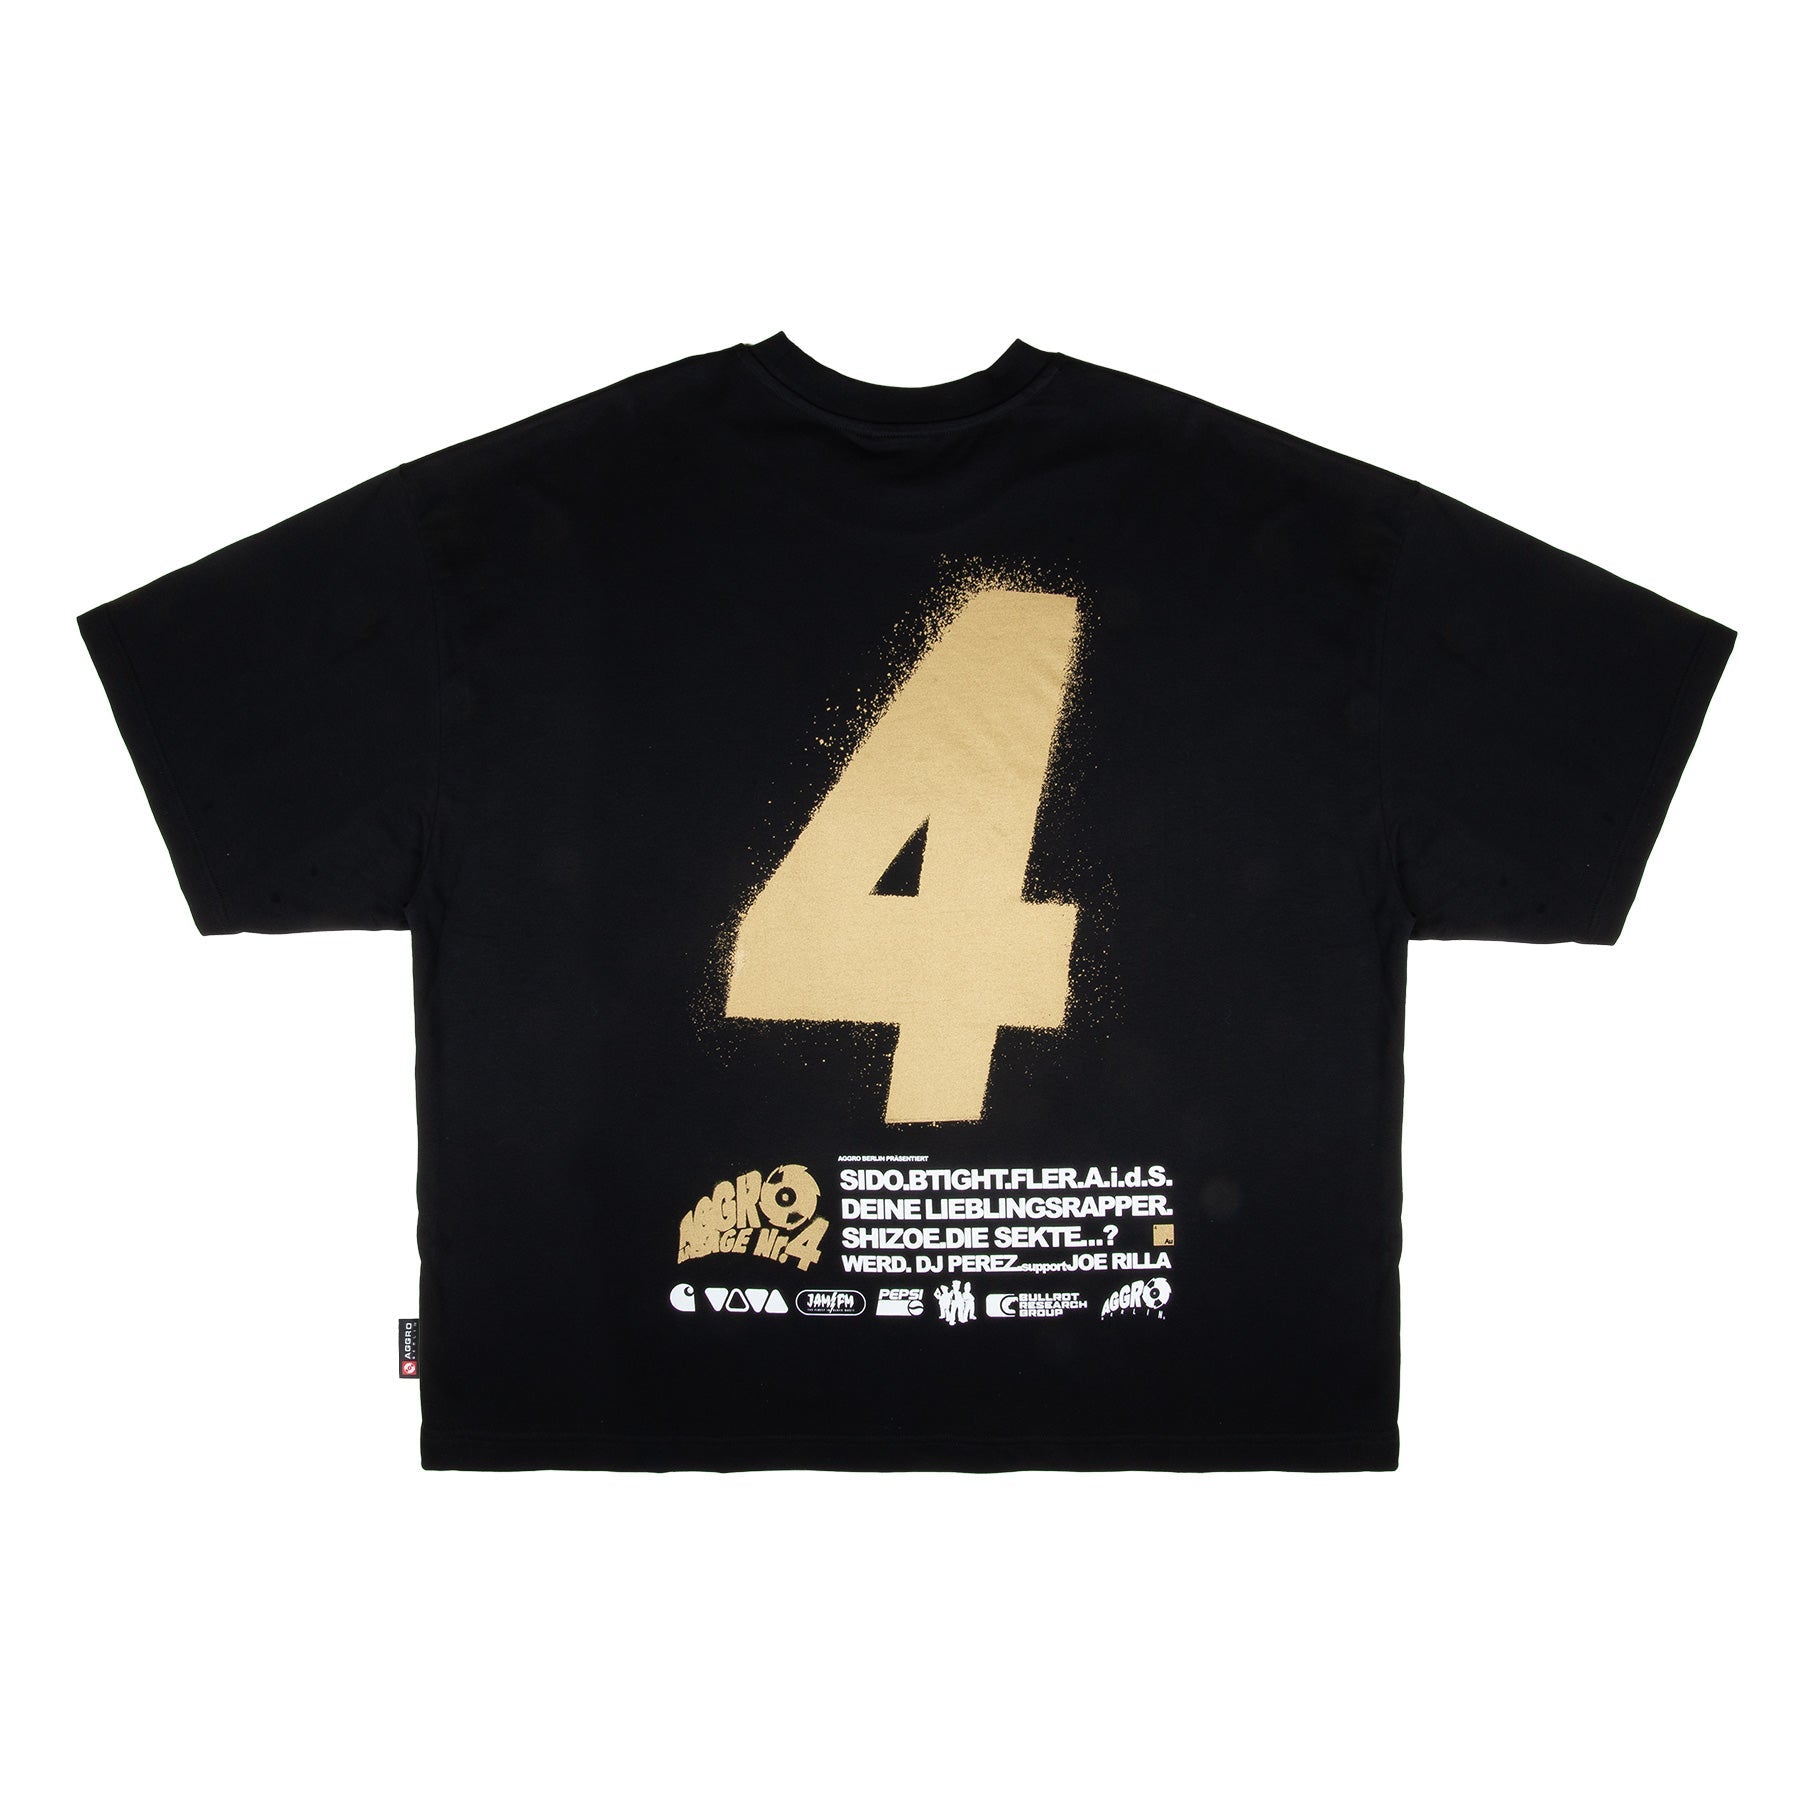 AGGRO Berlin - AGGRO Ansage Nr. 4 Gold Edition T-Shirt Schwarz